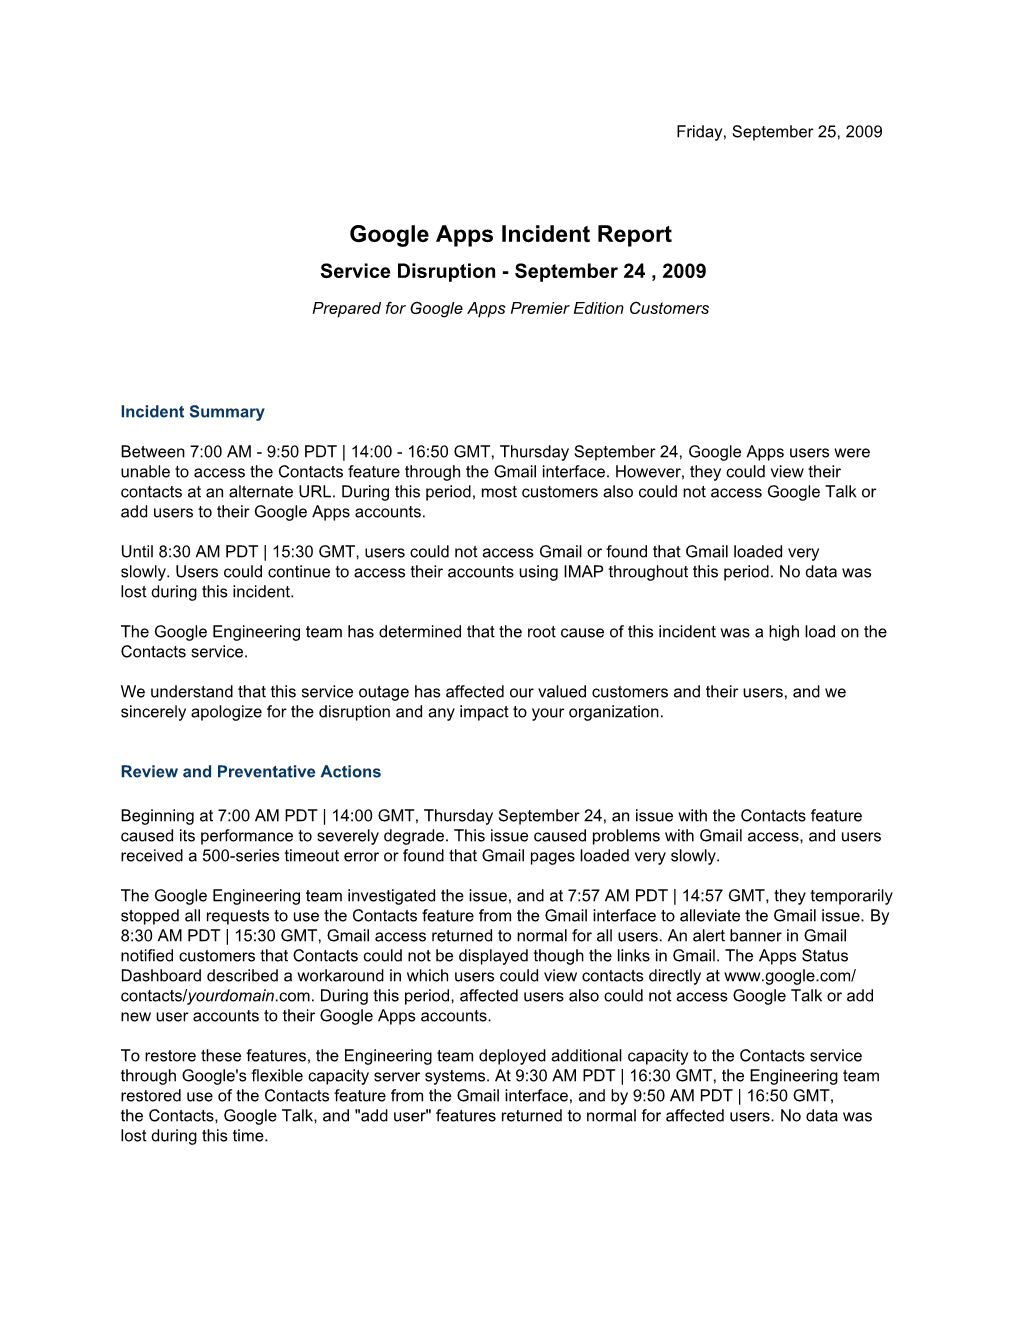 Google Apps Incident Report 1